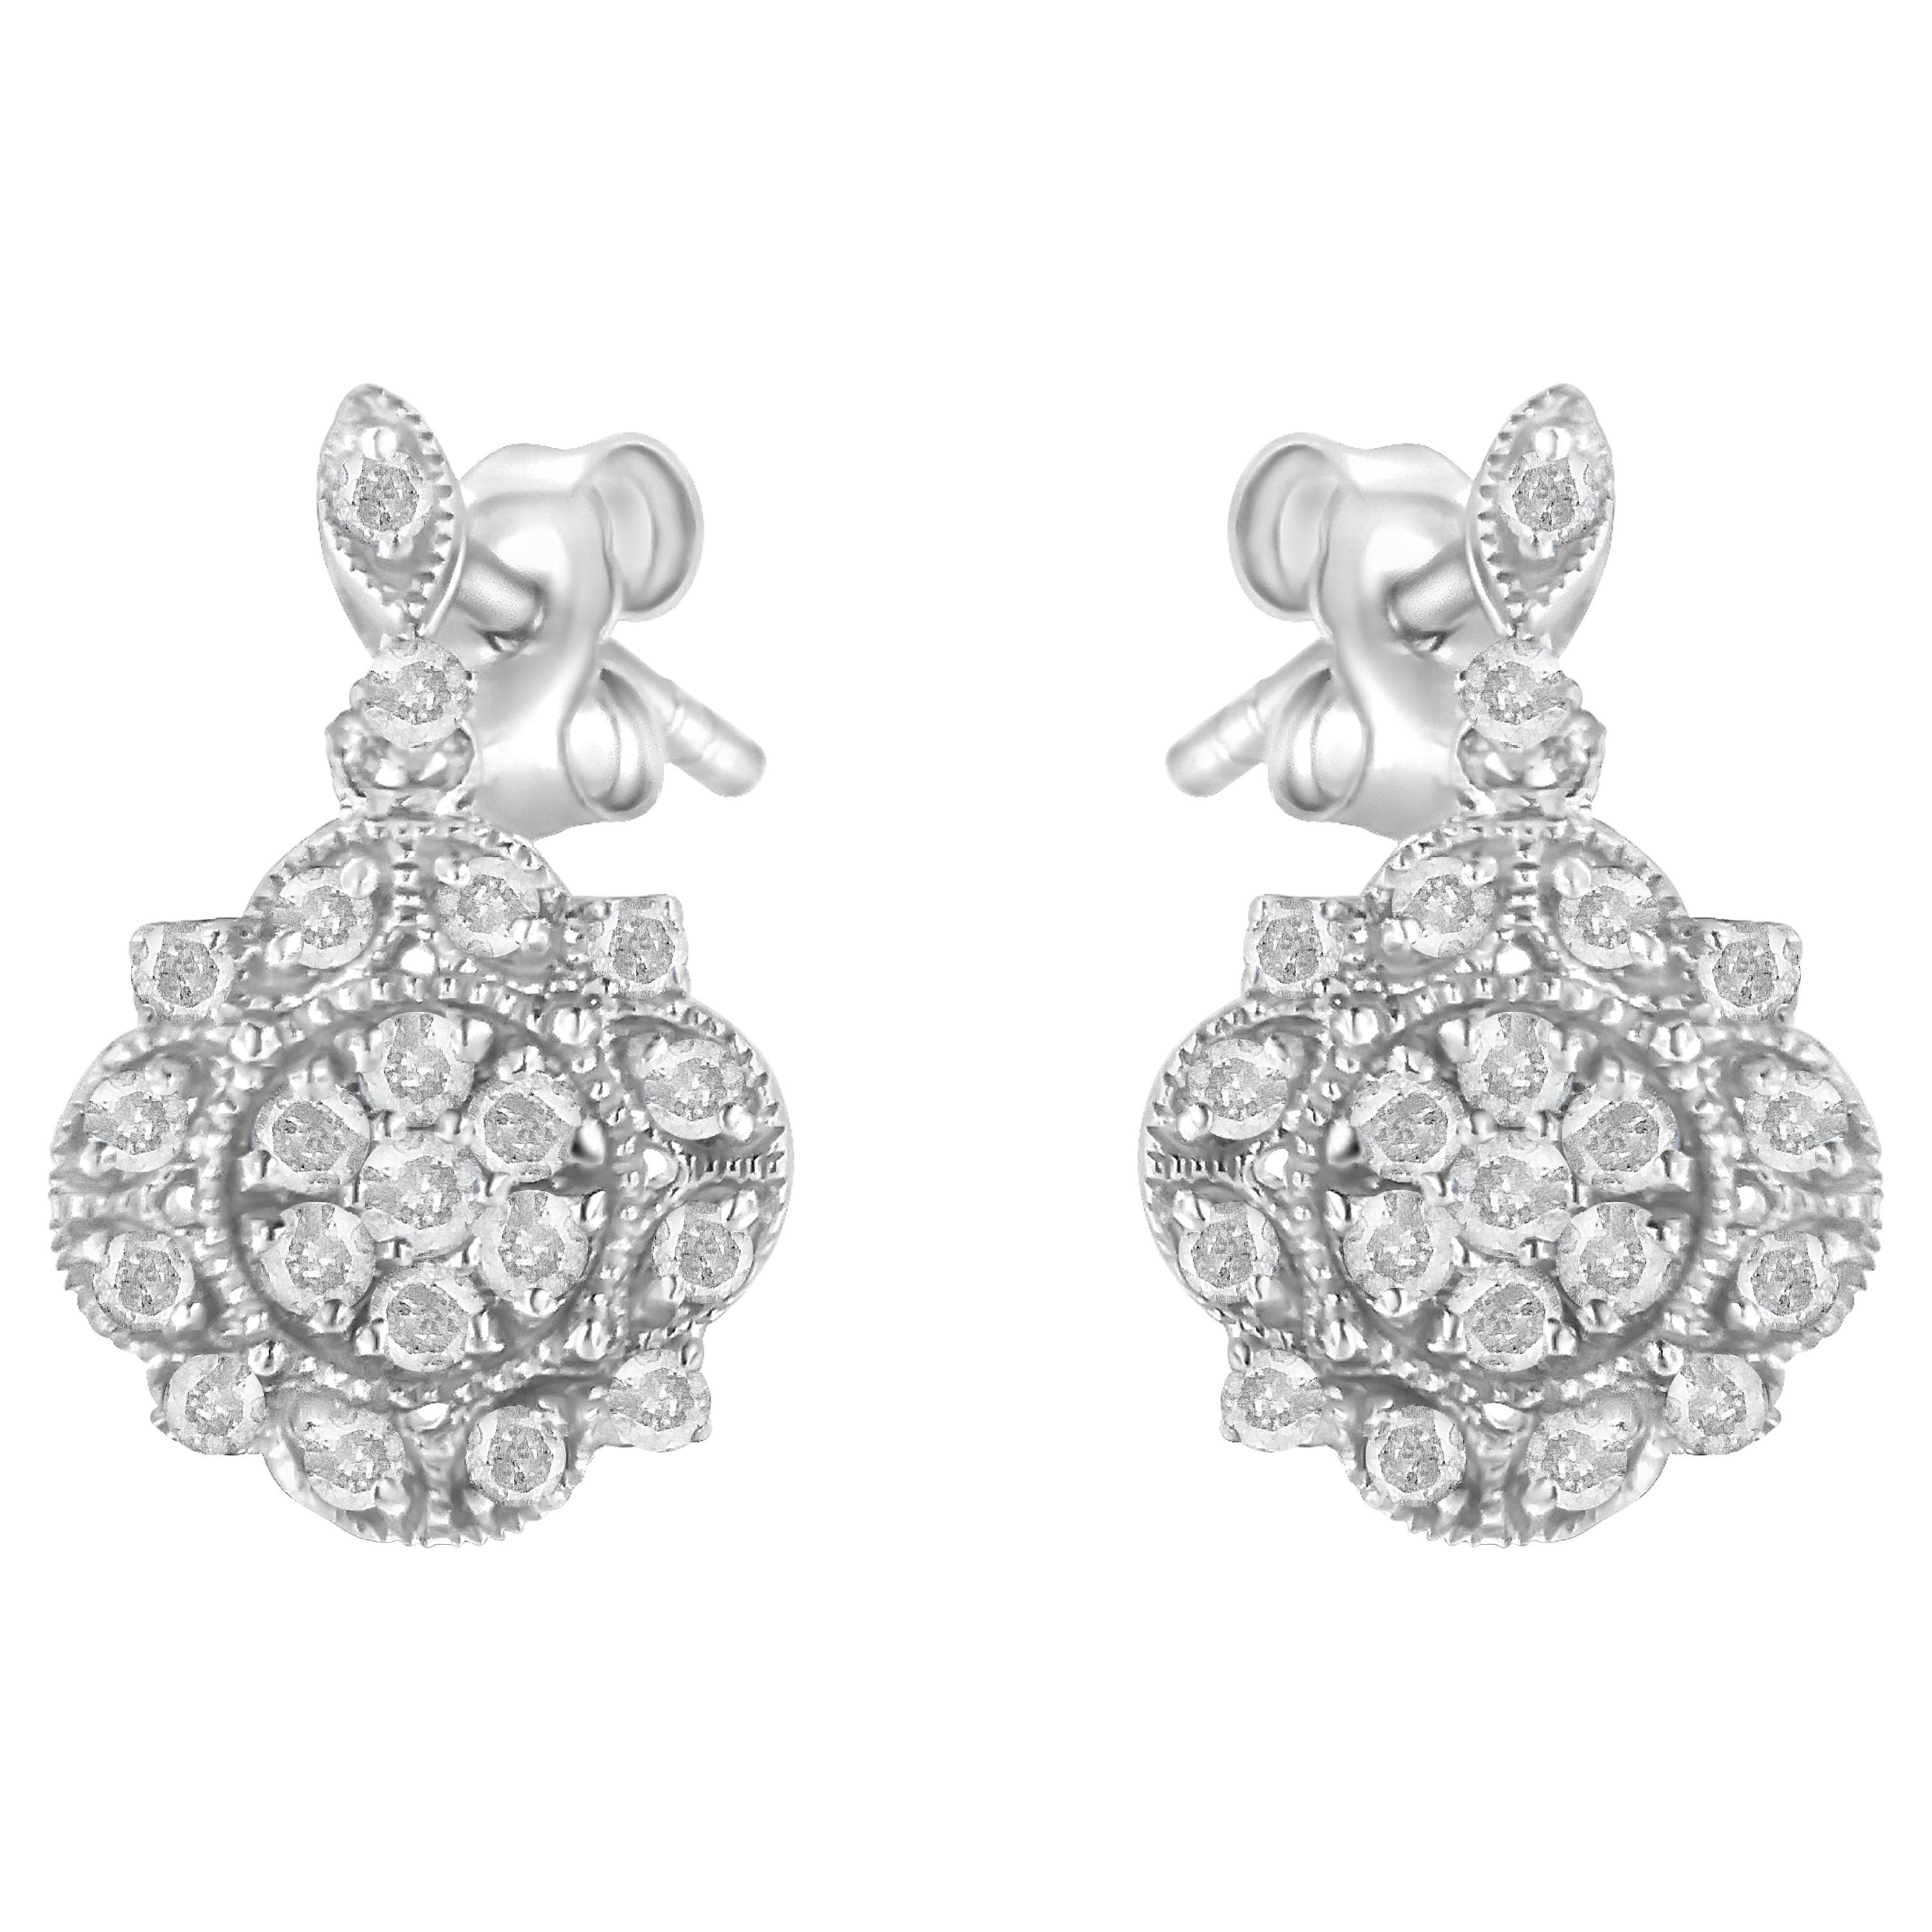 .925 Sterlingsilber 1/2 Karat Diamant-Ohrring mit Miligrain-Ohrring im Angebot